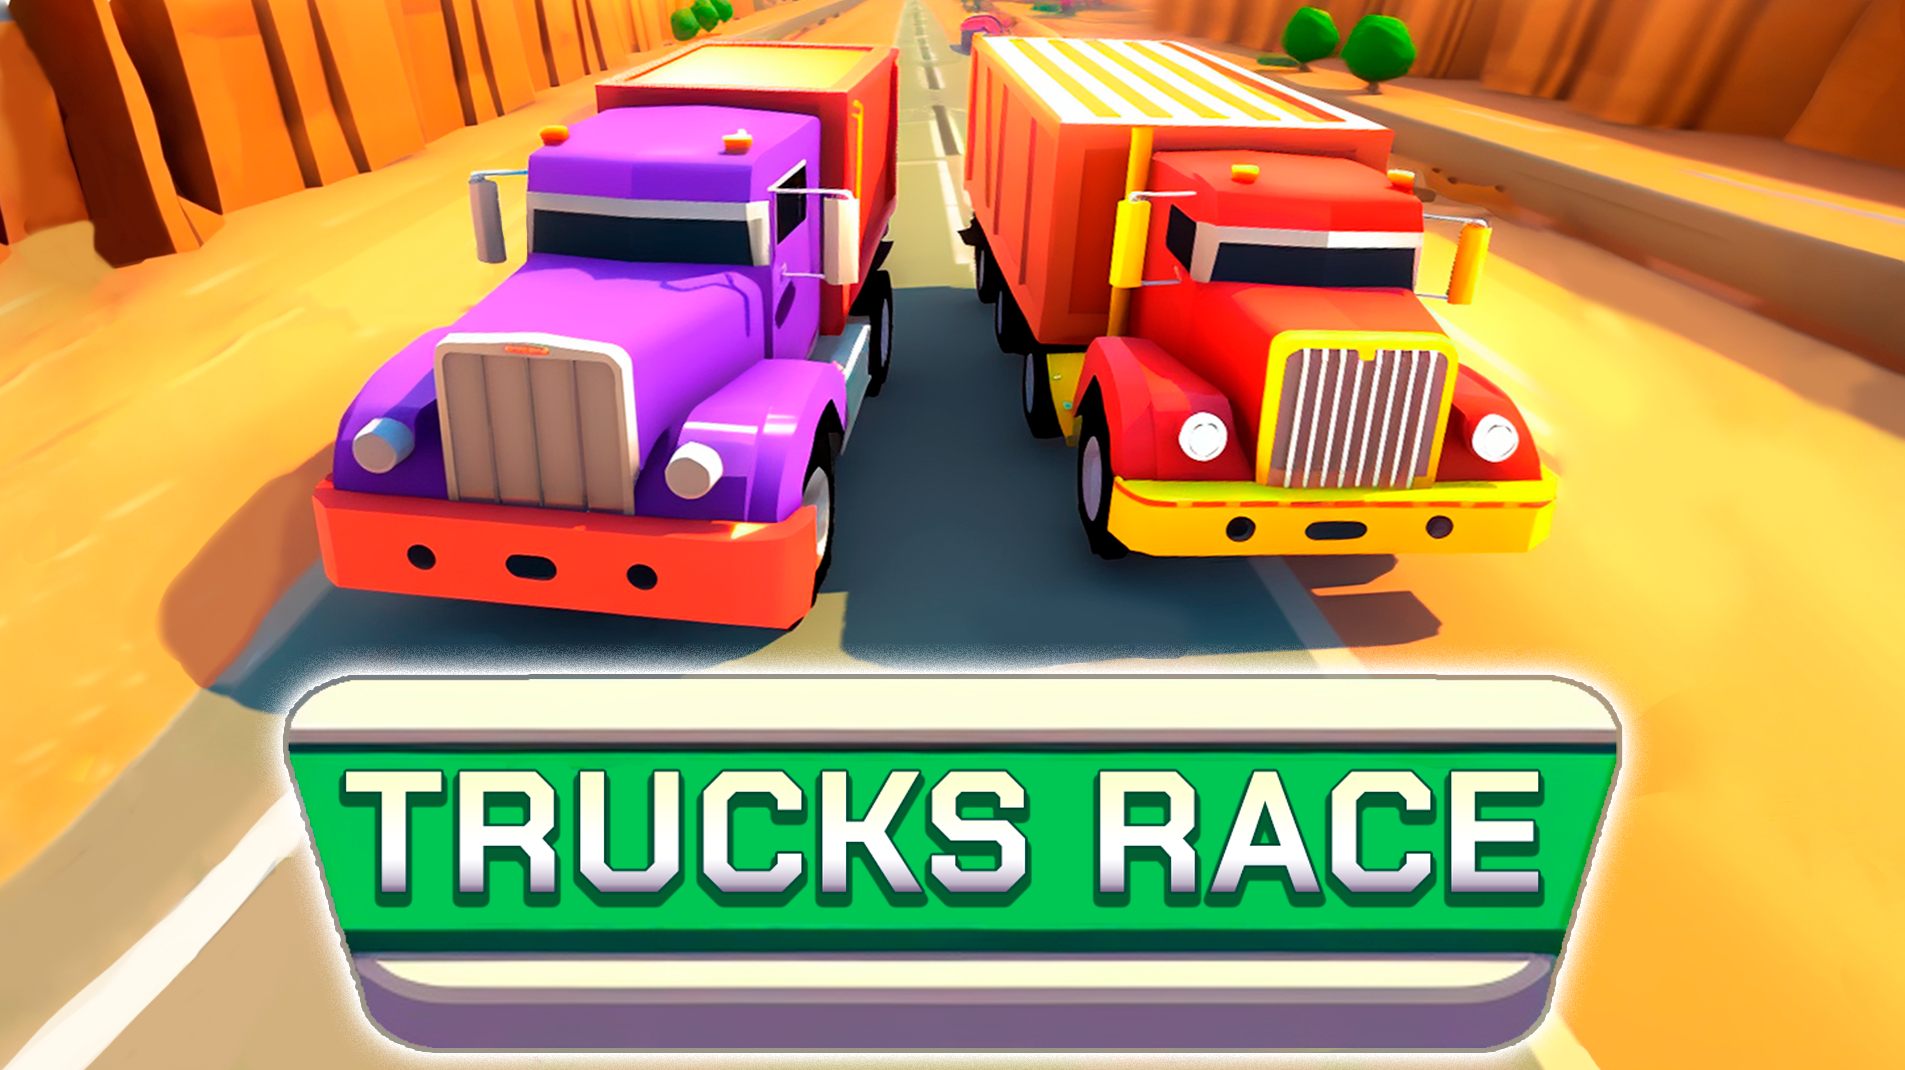 Trucks Race Game Image